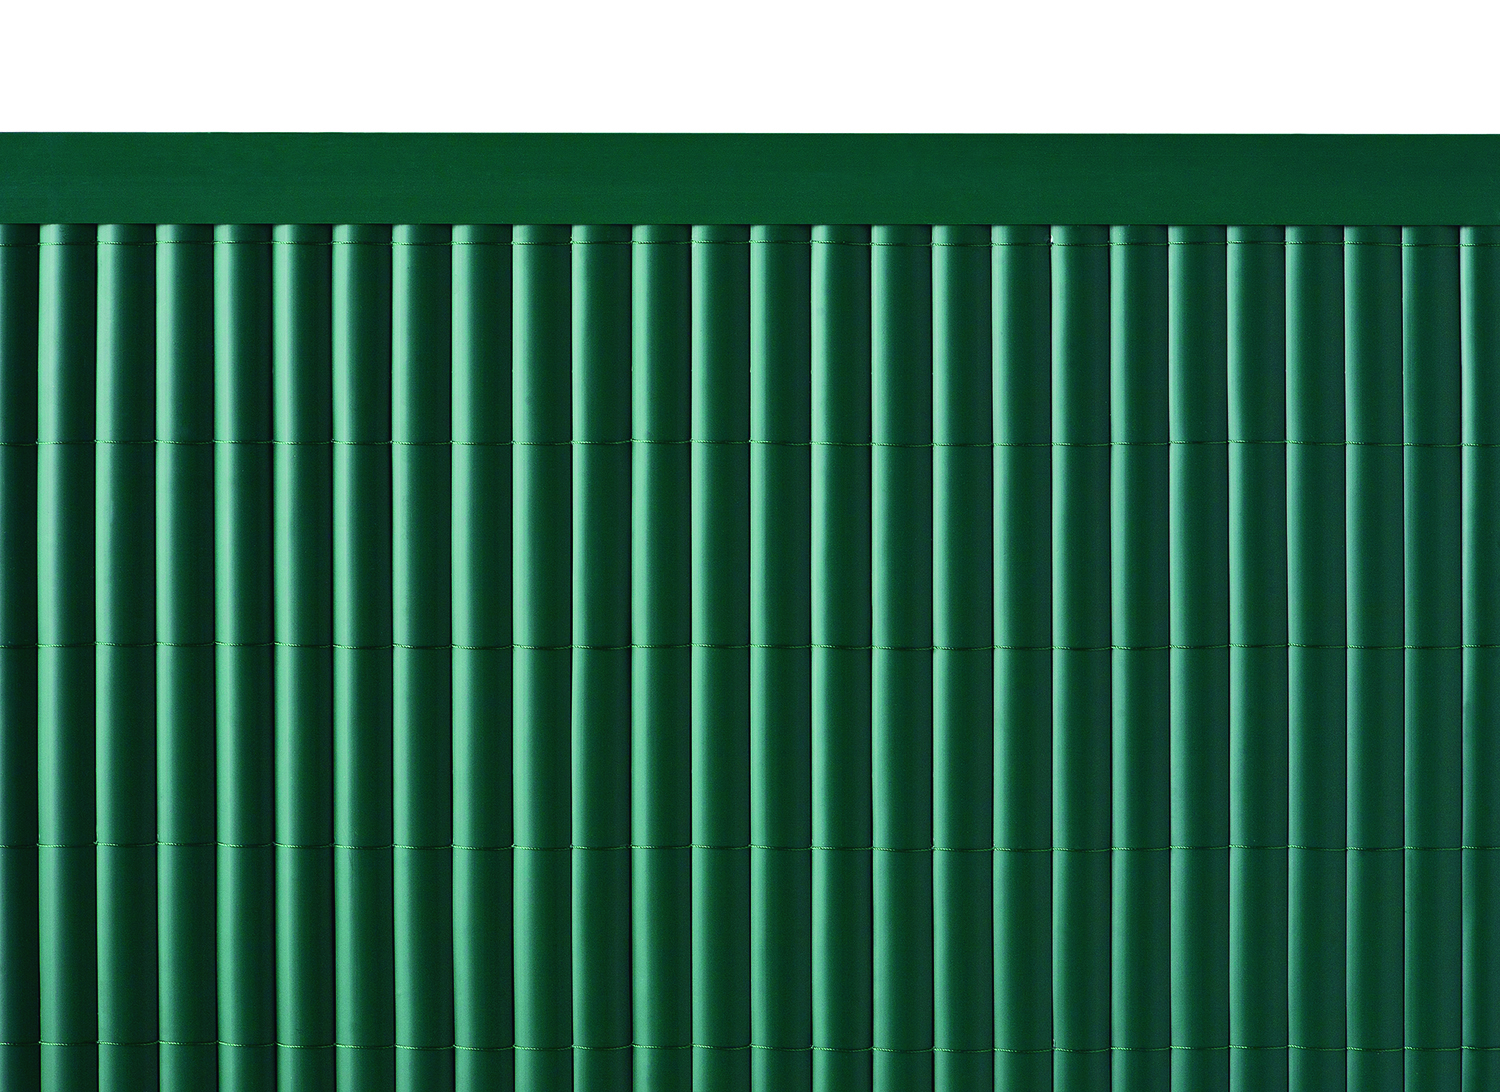 Oval plastic cane Litecane PVC green 1,5x3 m